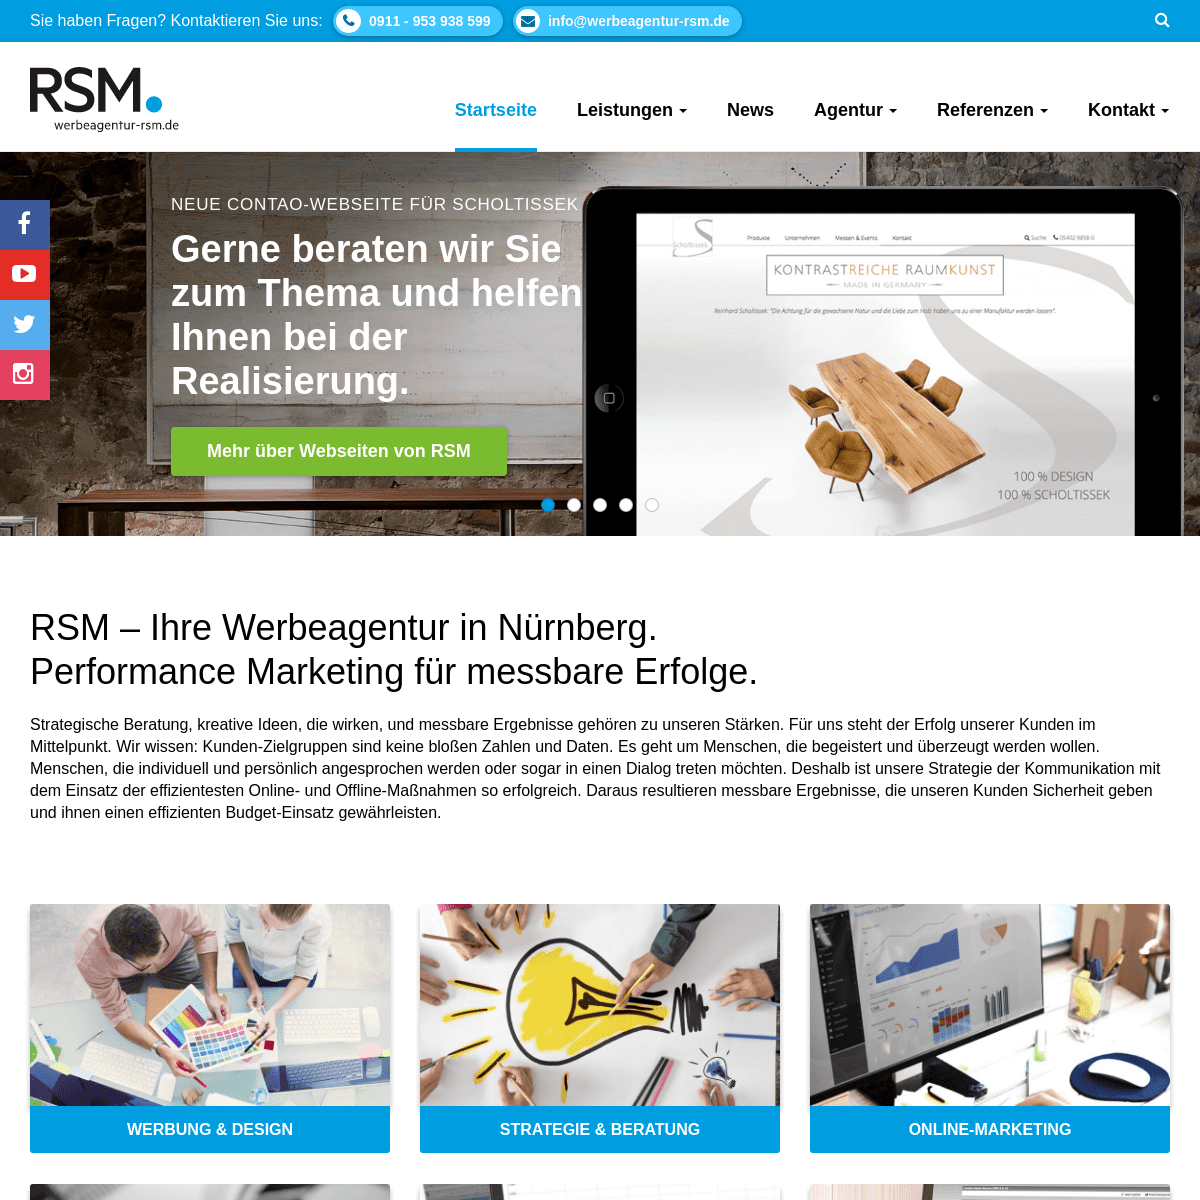 A complete backup of werbeagentur-rsm.de